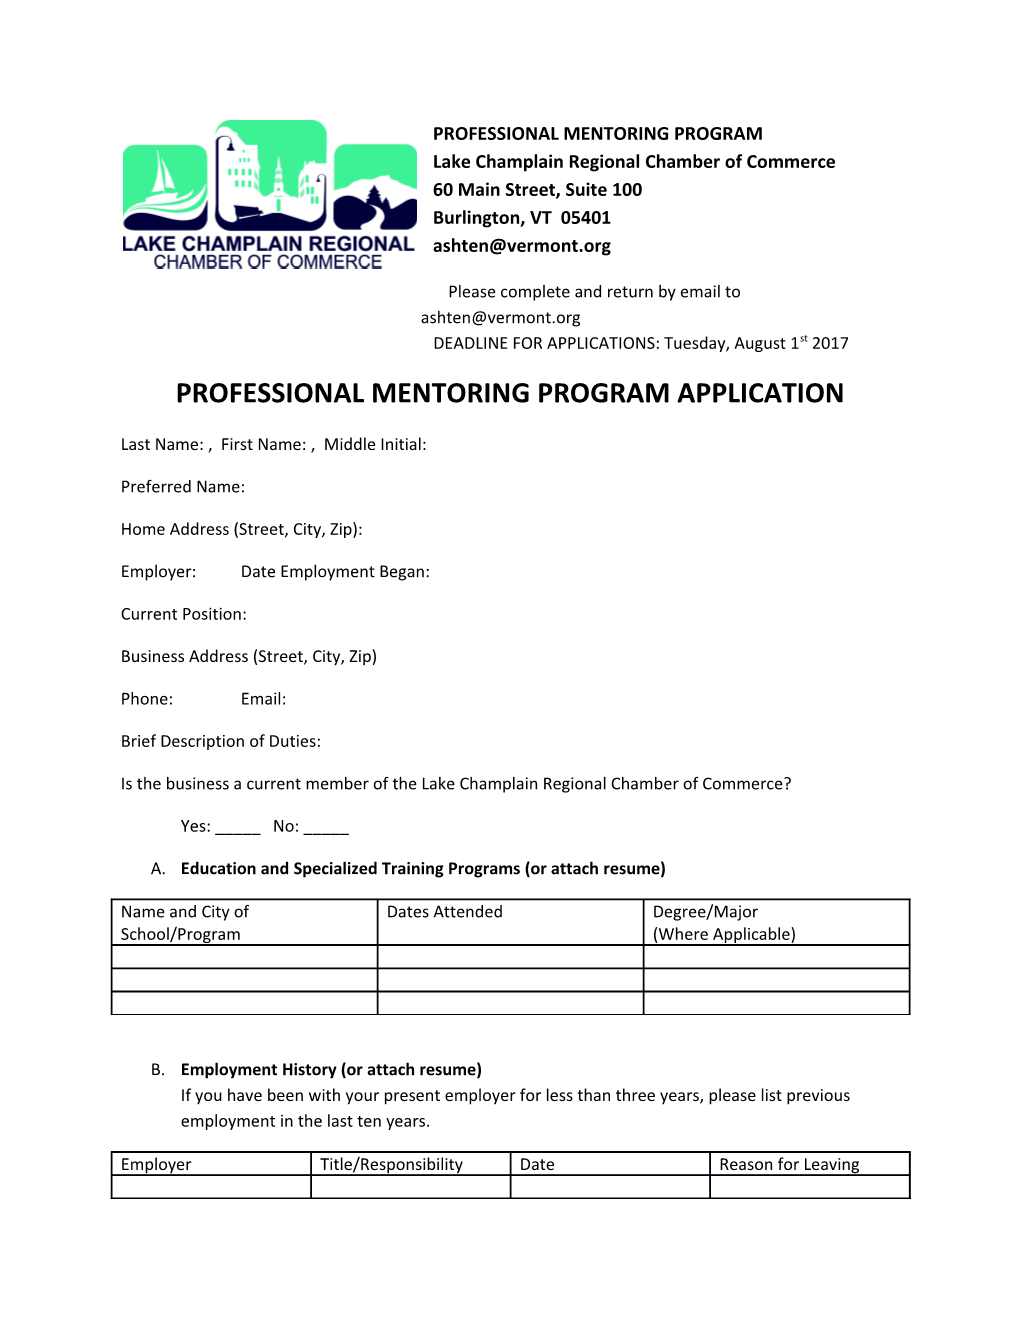 Professional Mentoring Program Application